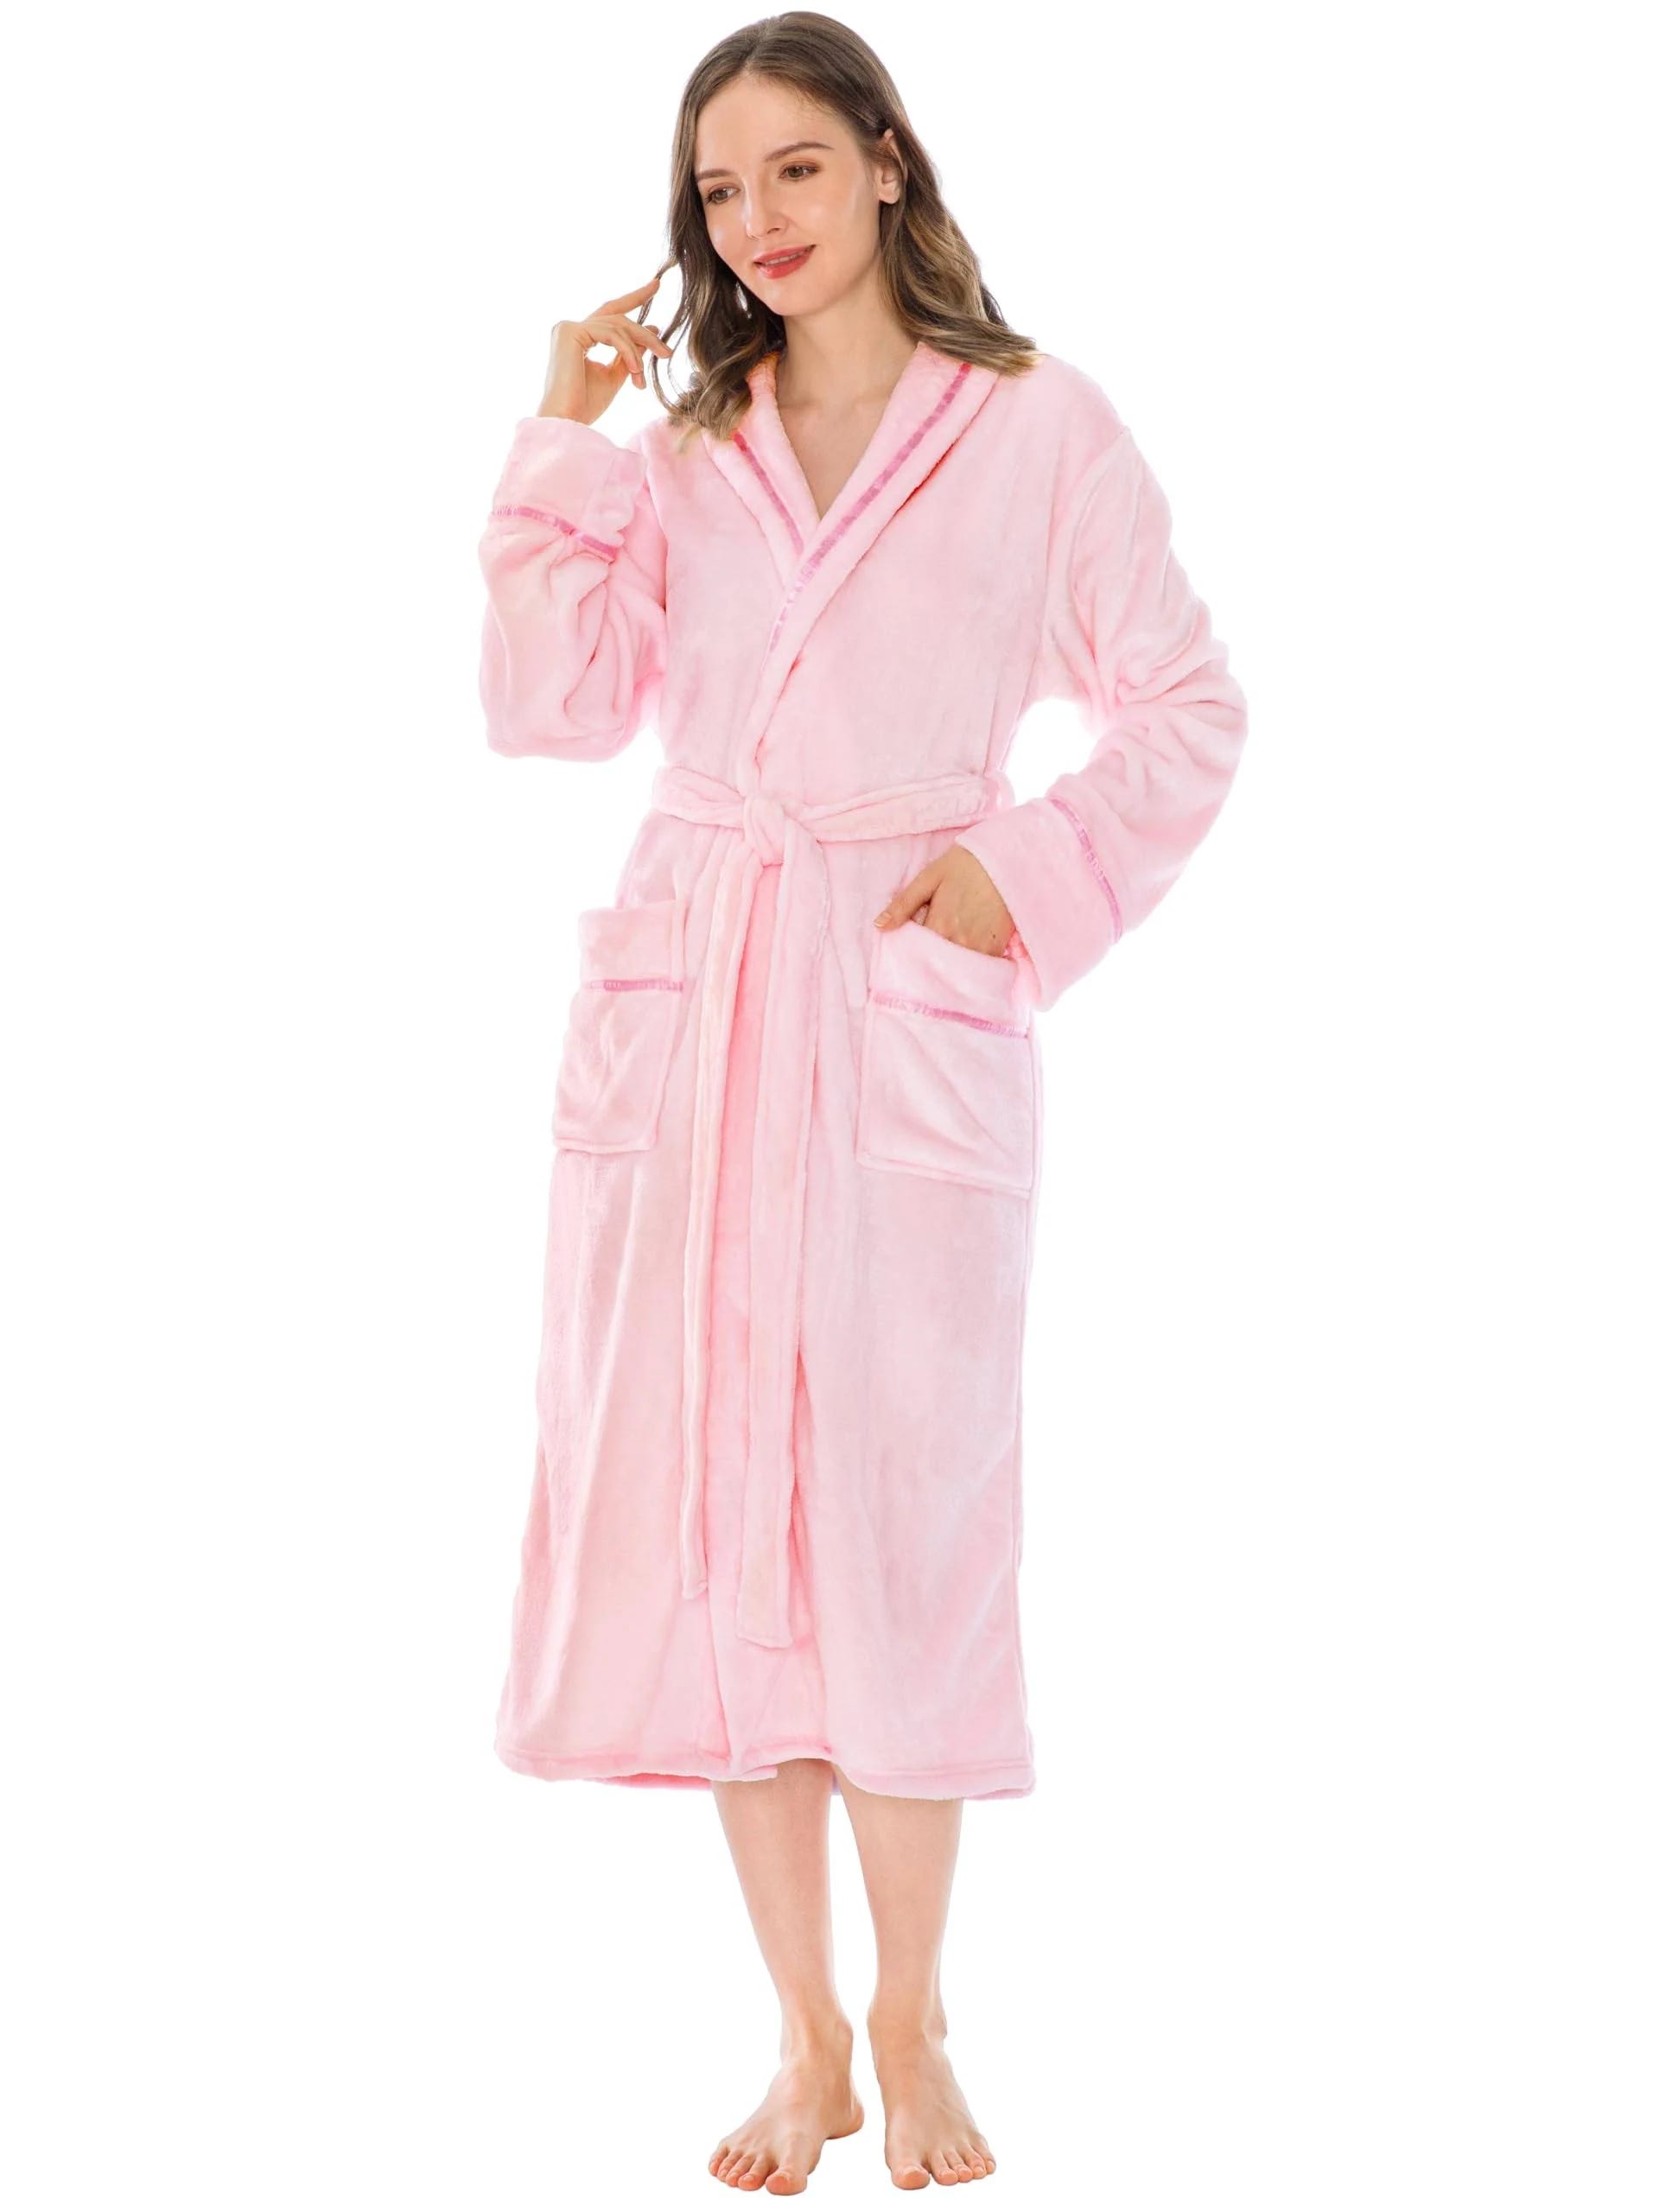 Plush Fleece Robe for Cozy Luxury at Home | Image